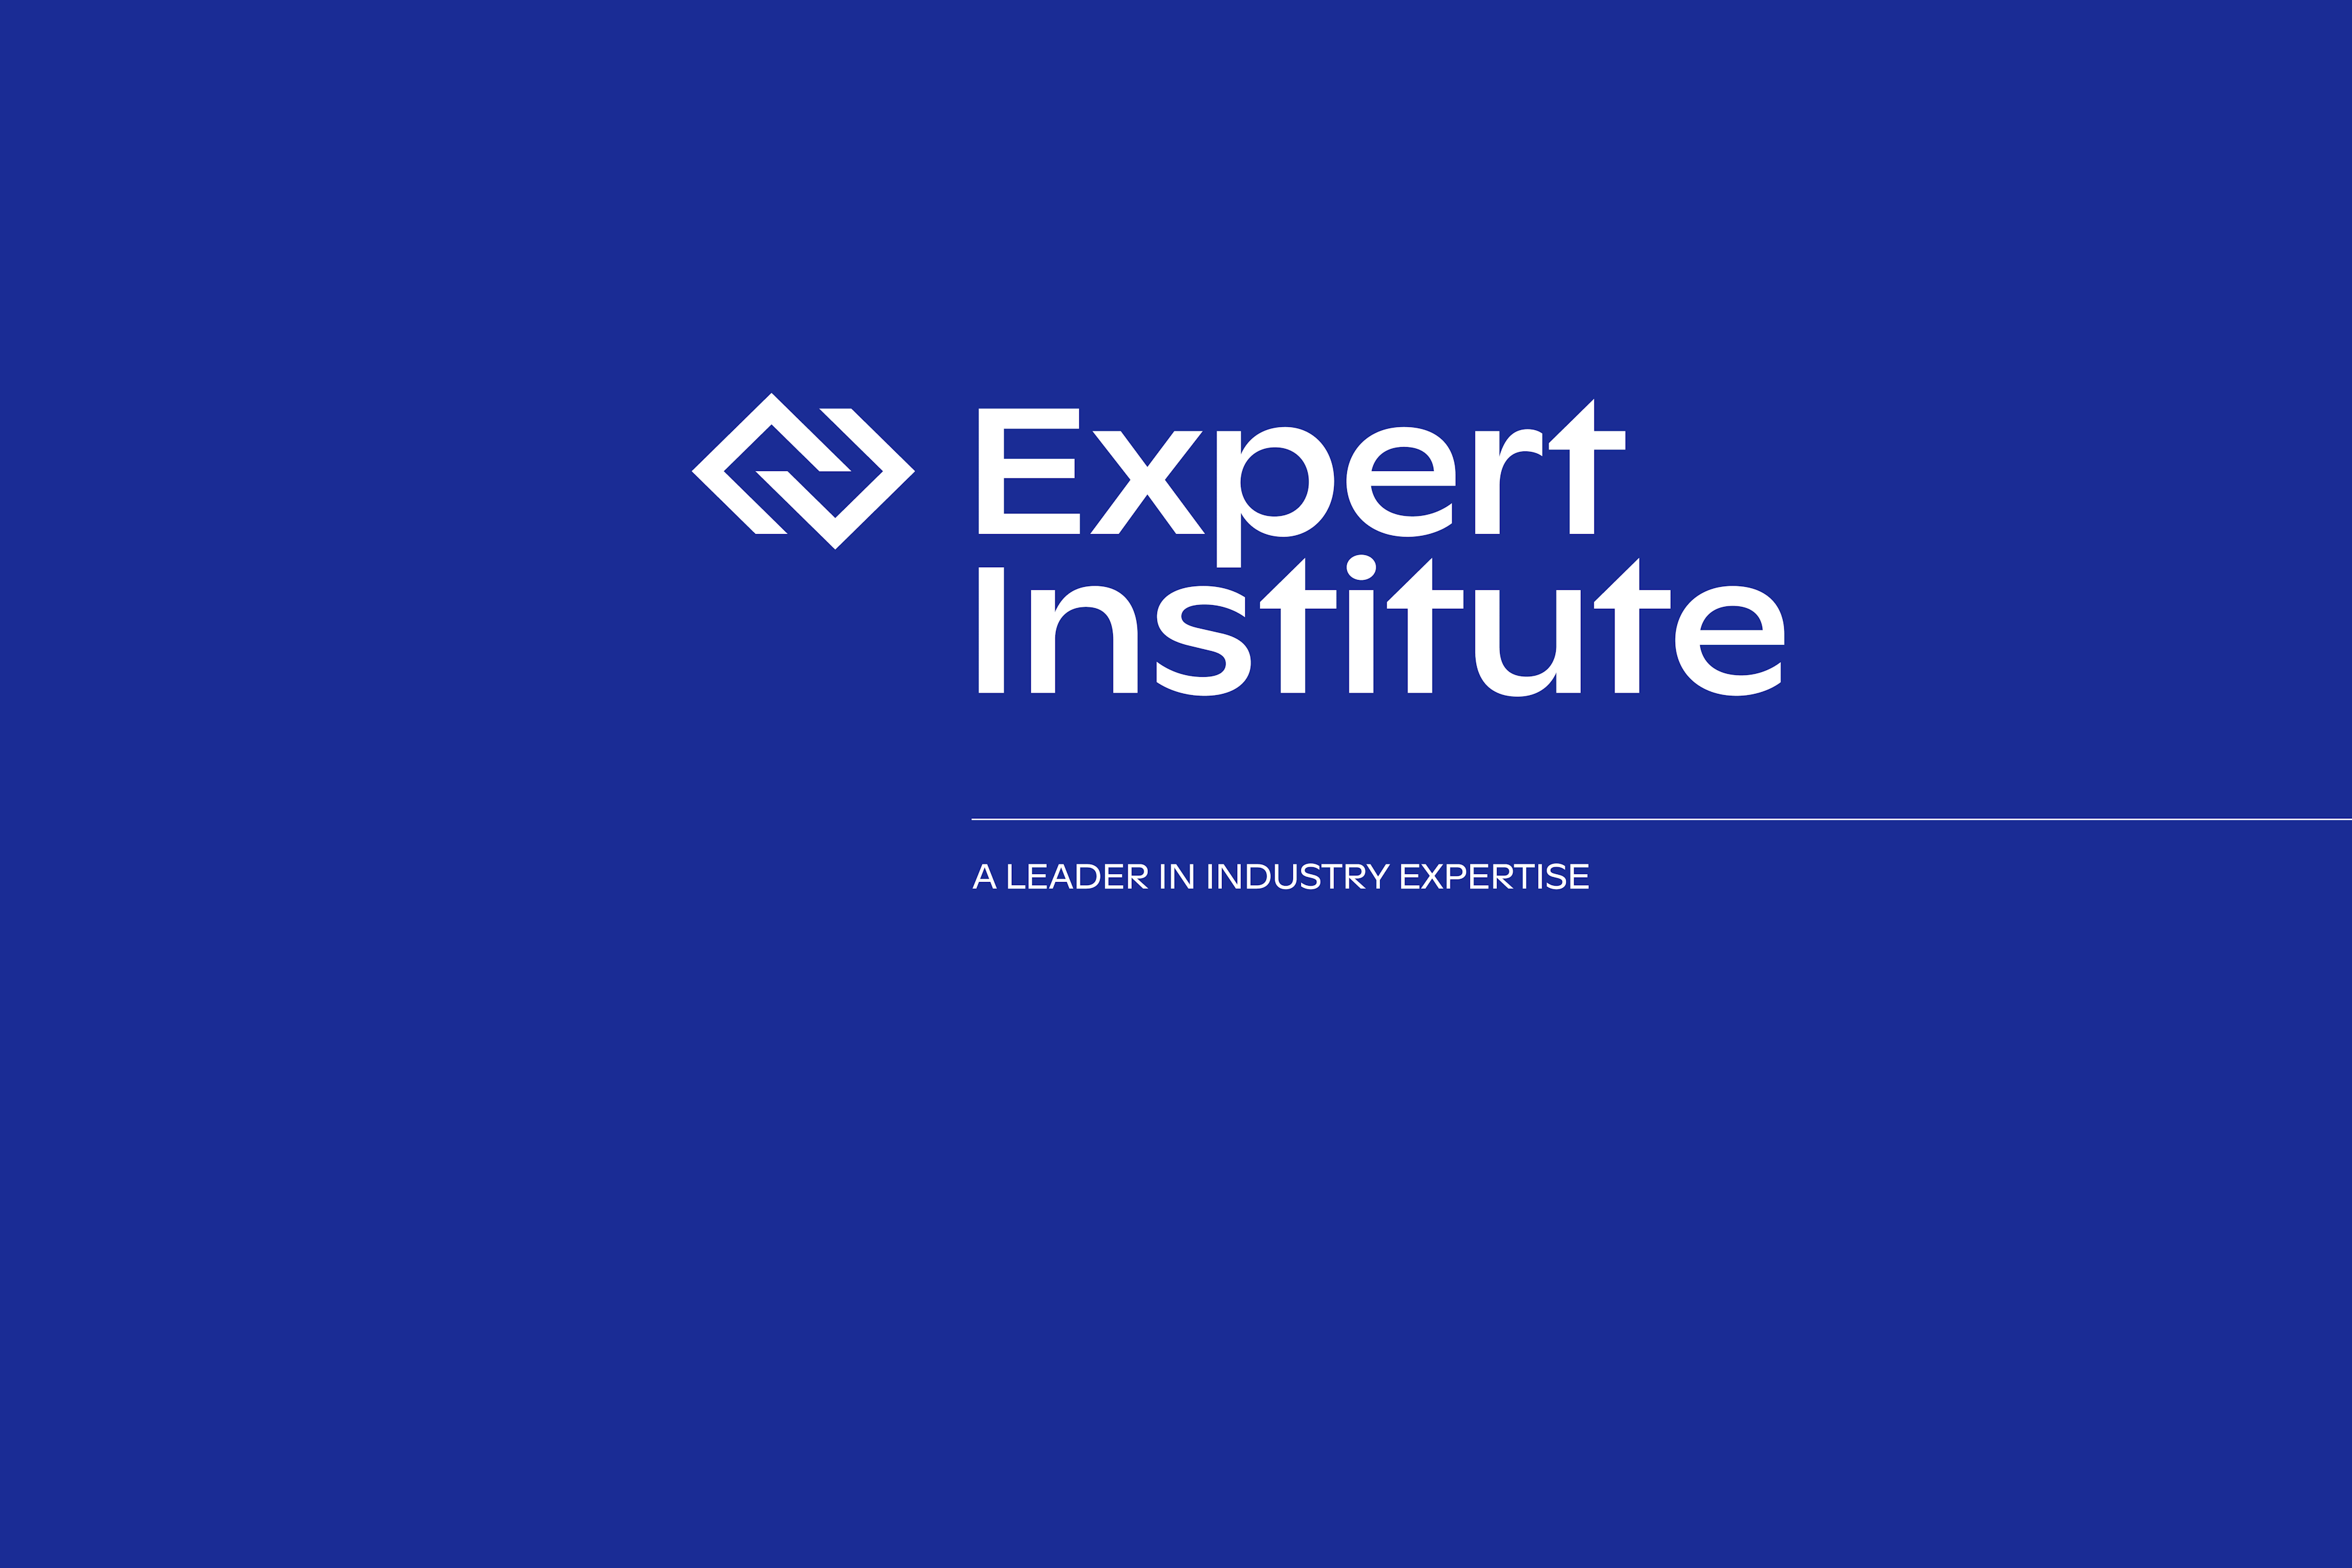 Expert Institute kicks off 2020 with a sleek rebrand